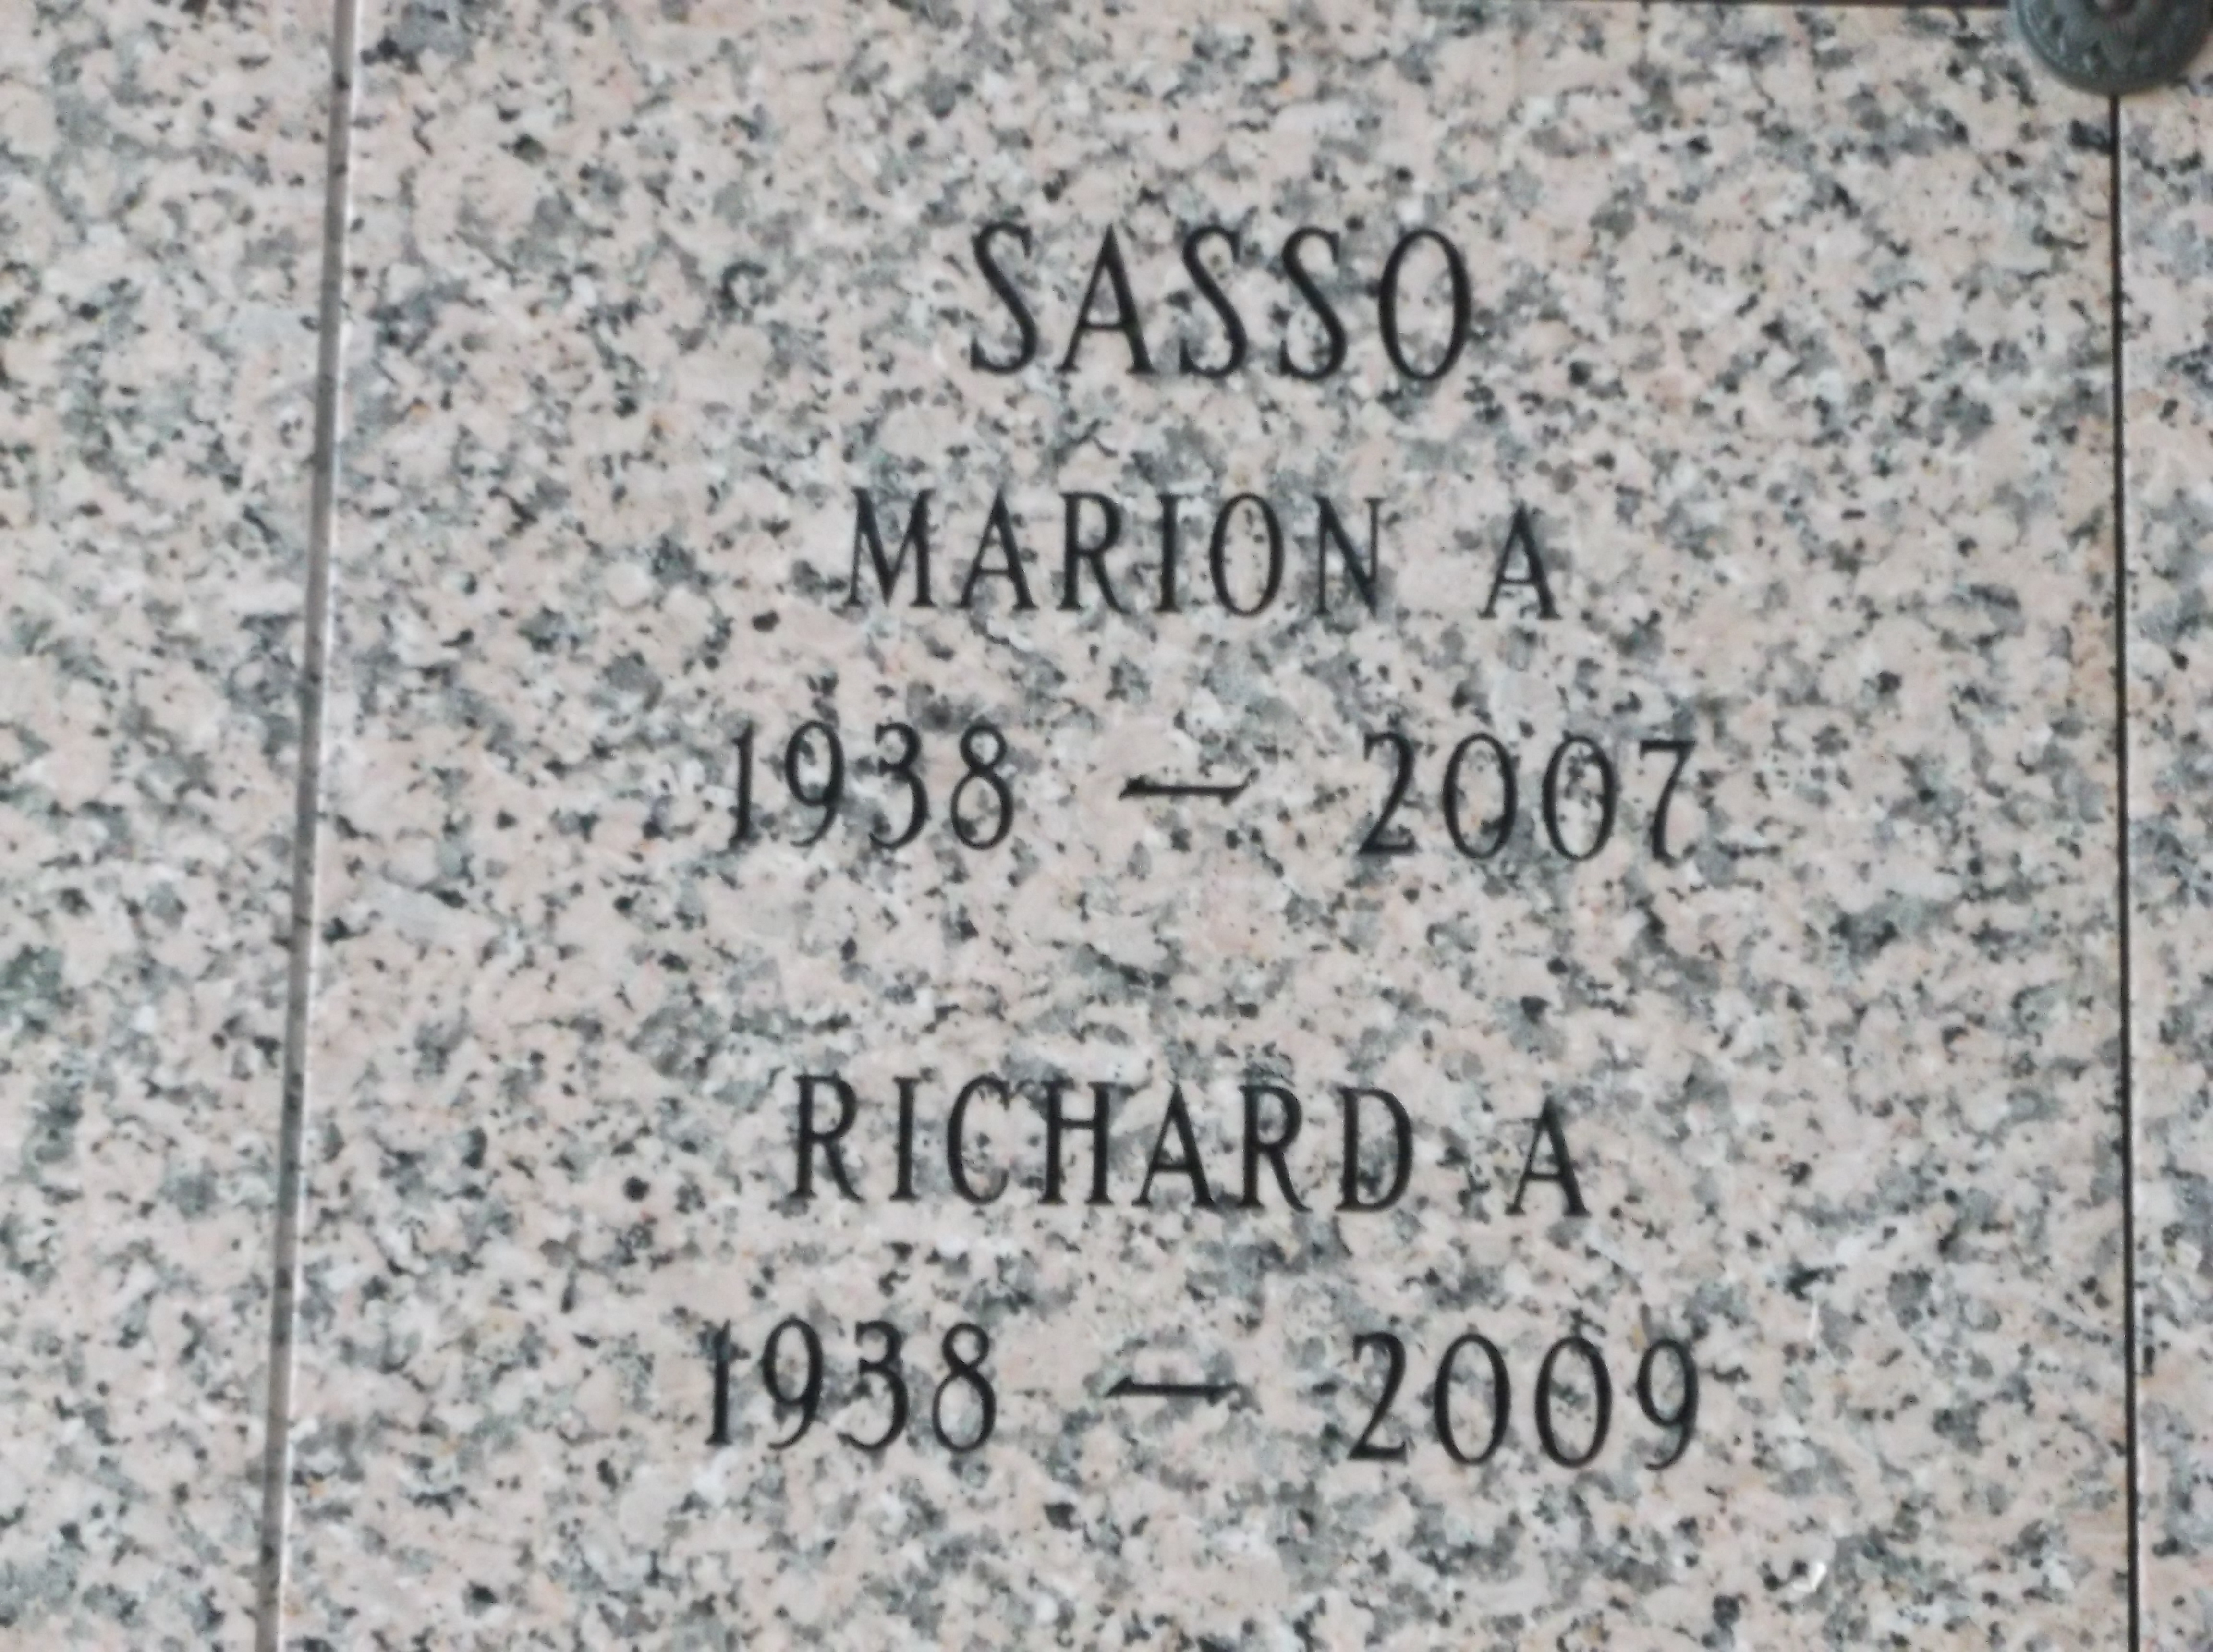 Richard A Sasso